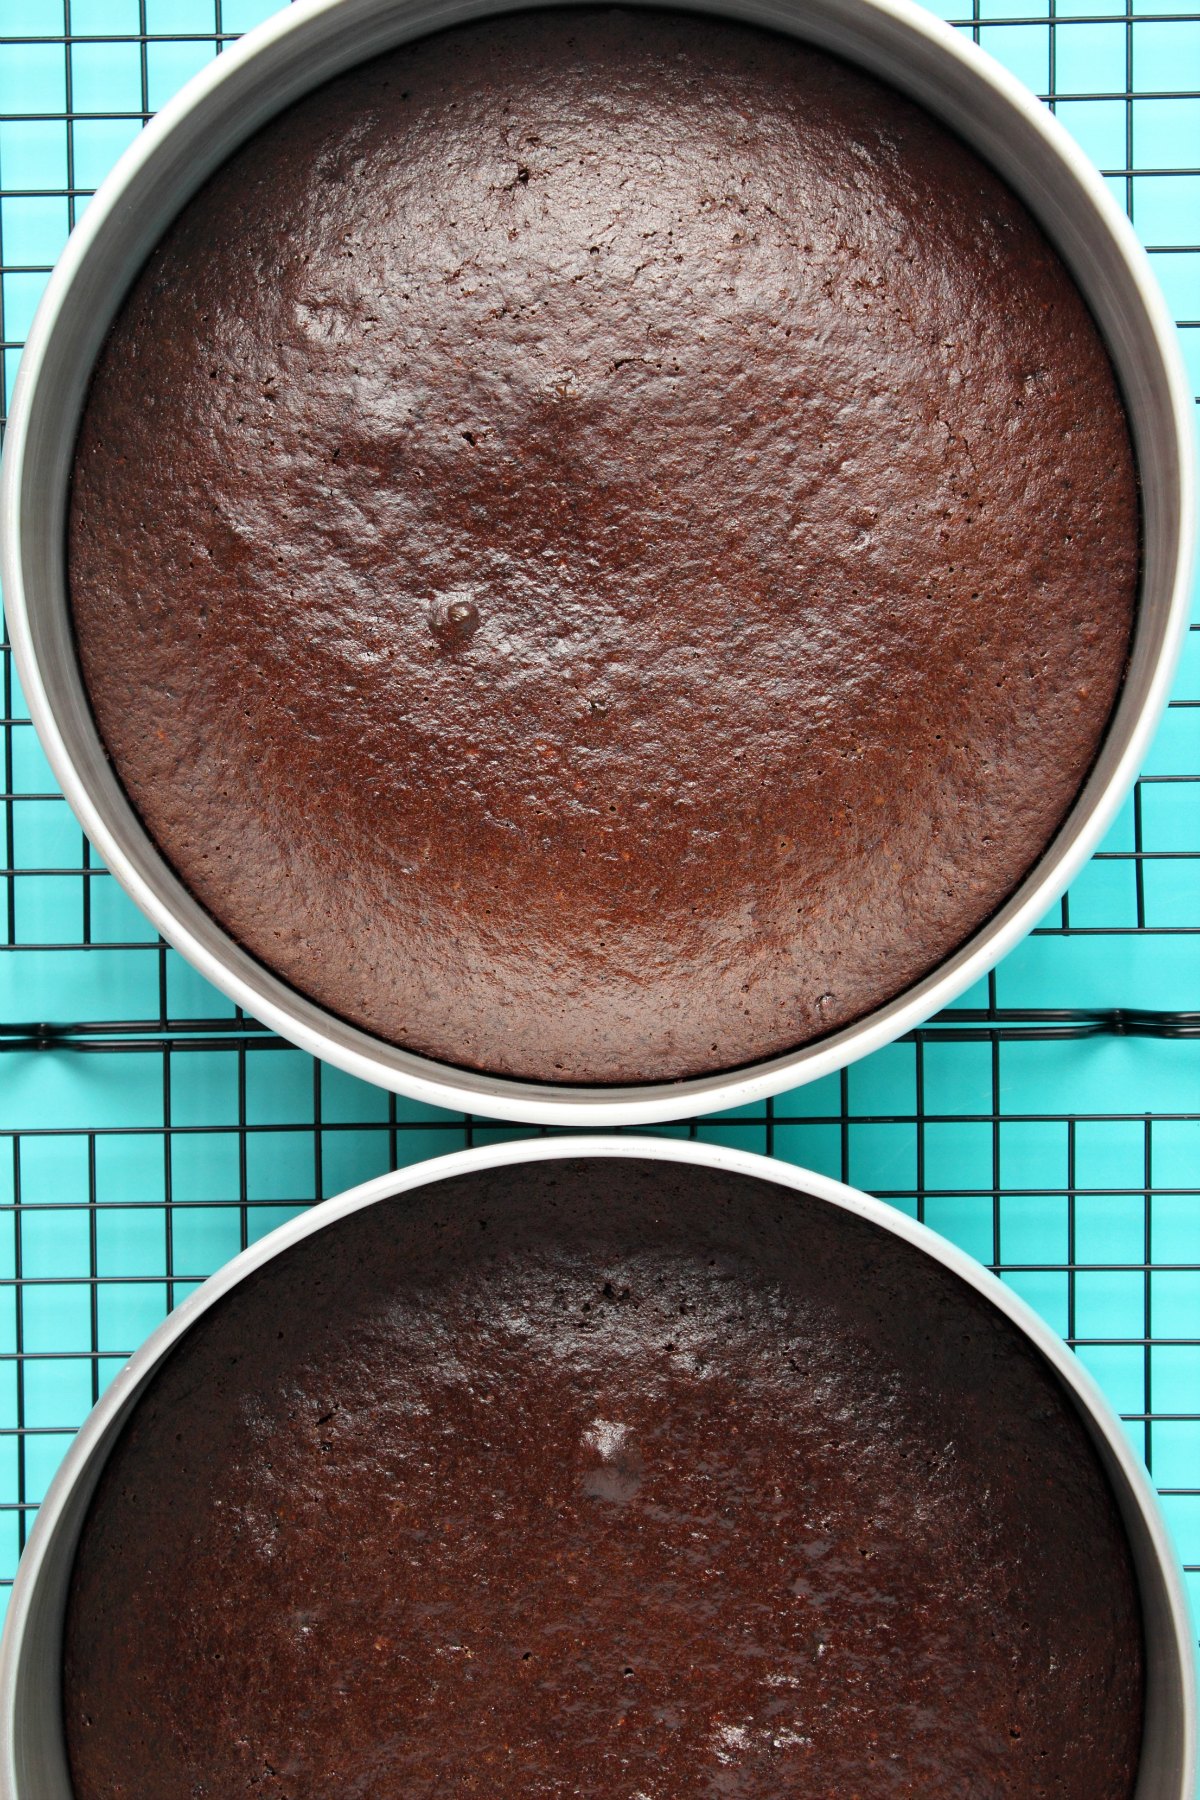 Freshly baked cakes in cake pans.